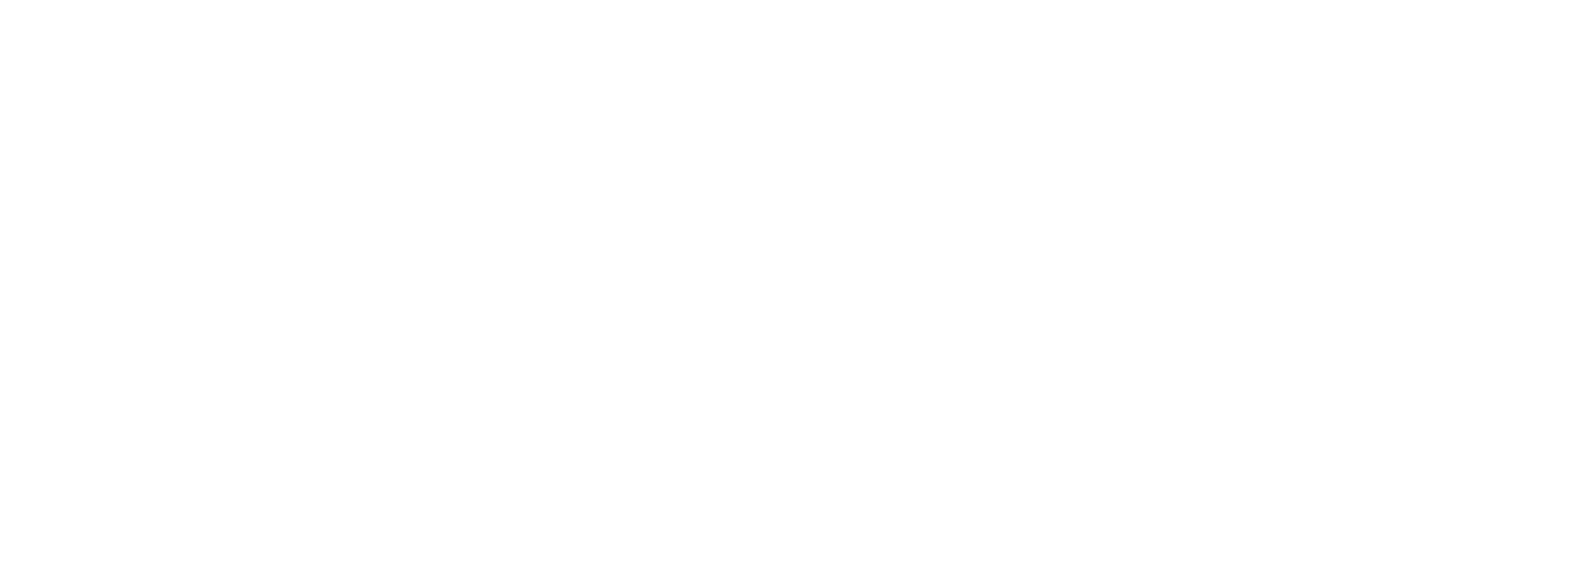 D'Ieteren Group Logo groß für dunkle Hintergründe (transparentes PNG)